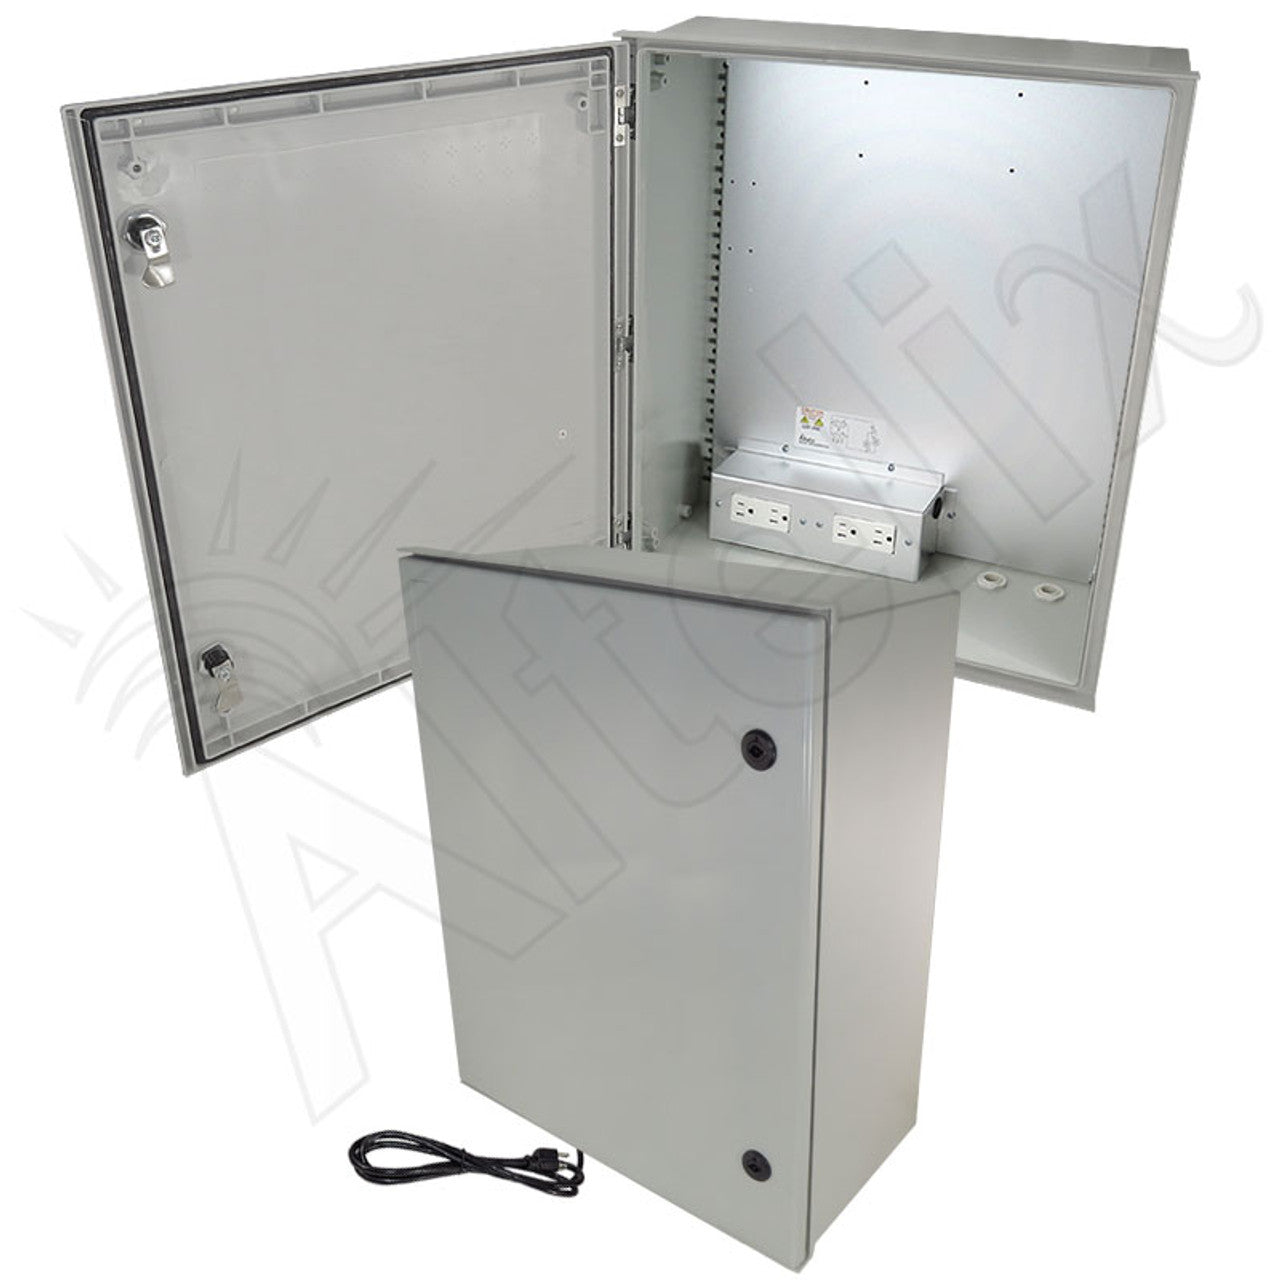 Altelix NEMA 4X Heated Fiberglass Weatherproof Enclosure with Equipment Mounting Plate, 120 VAC Outlets & Power Cord